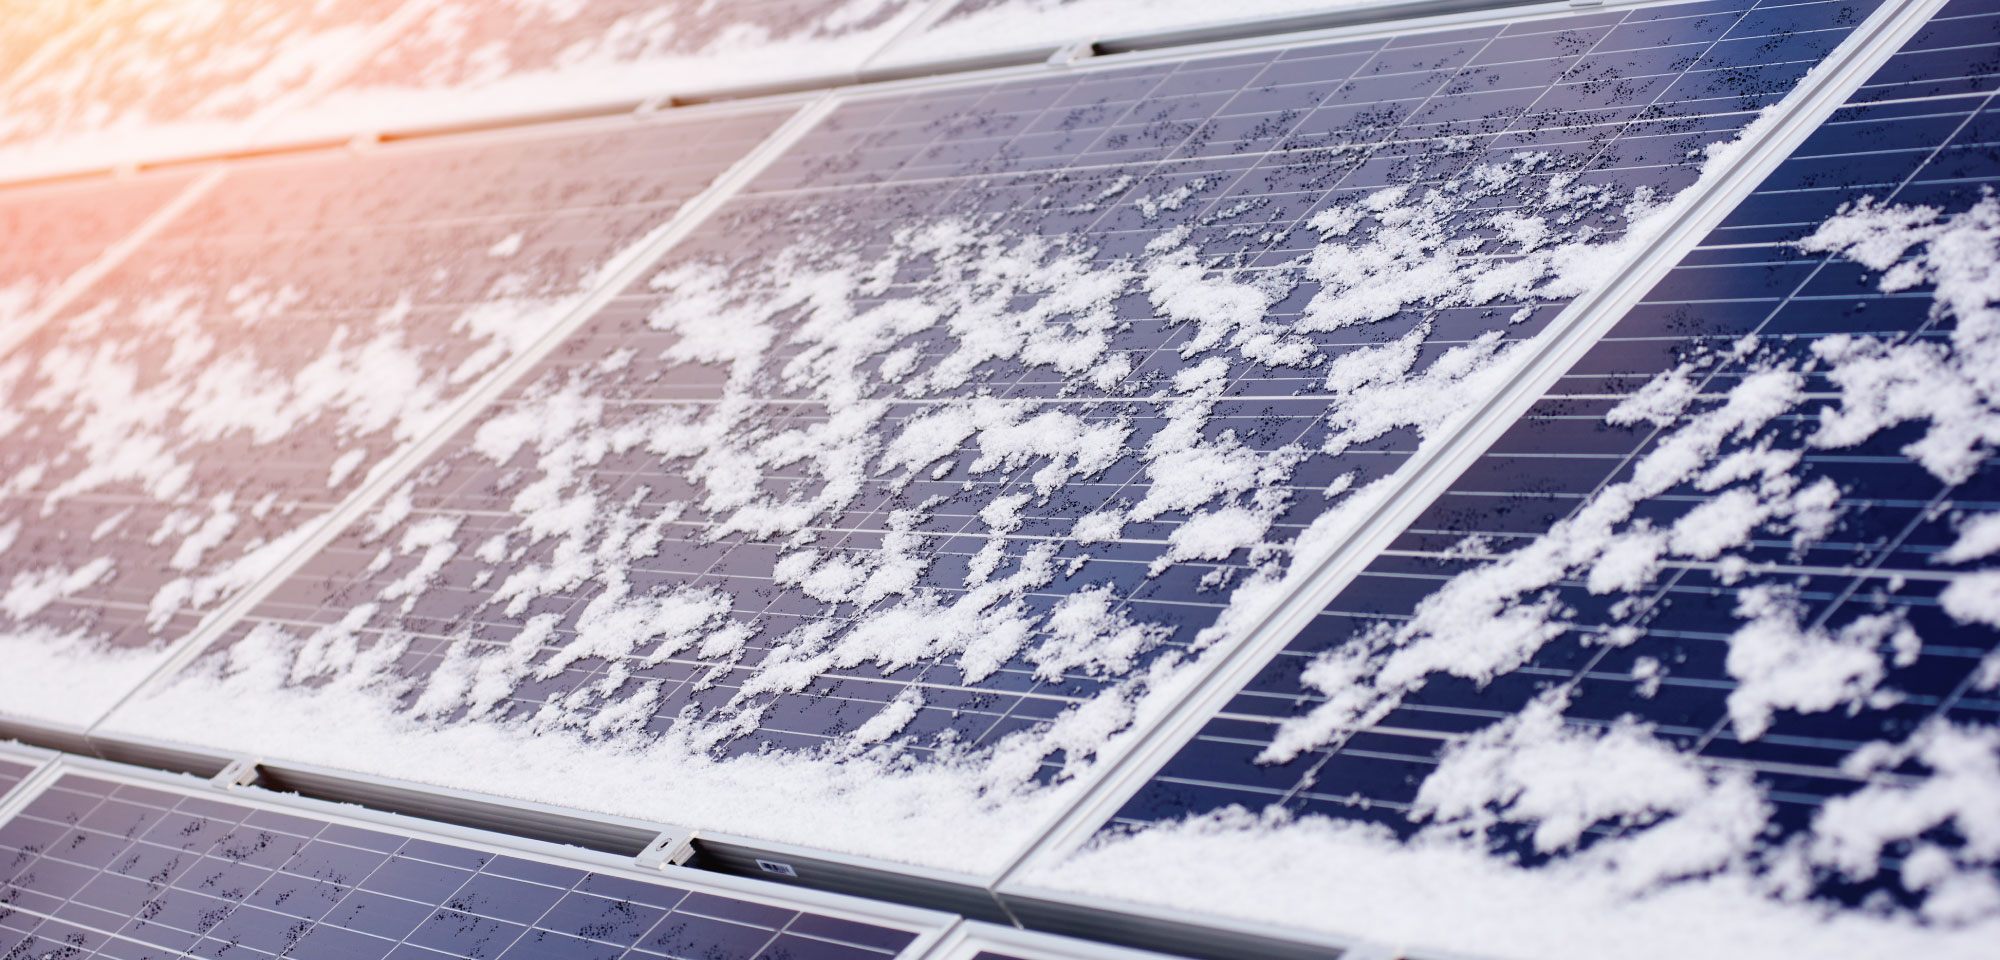 Snow on solar panels: will solar panels work in the winter?